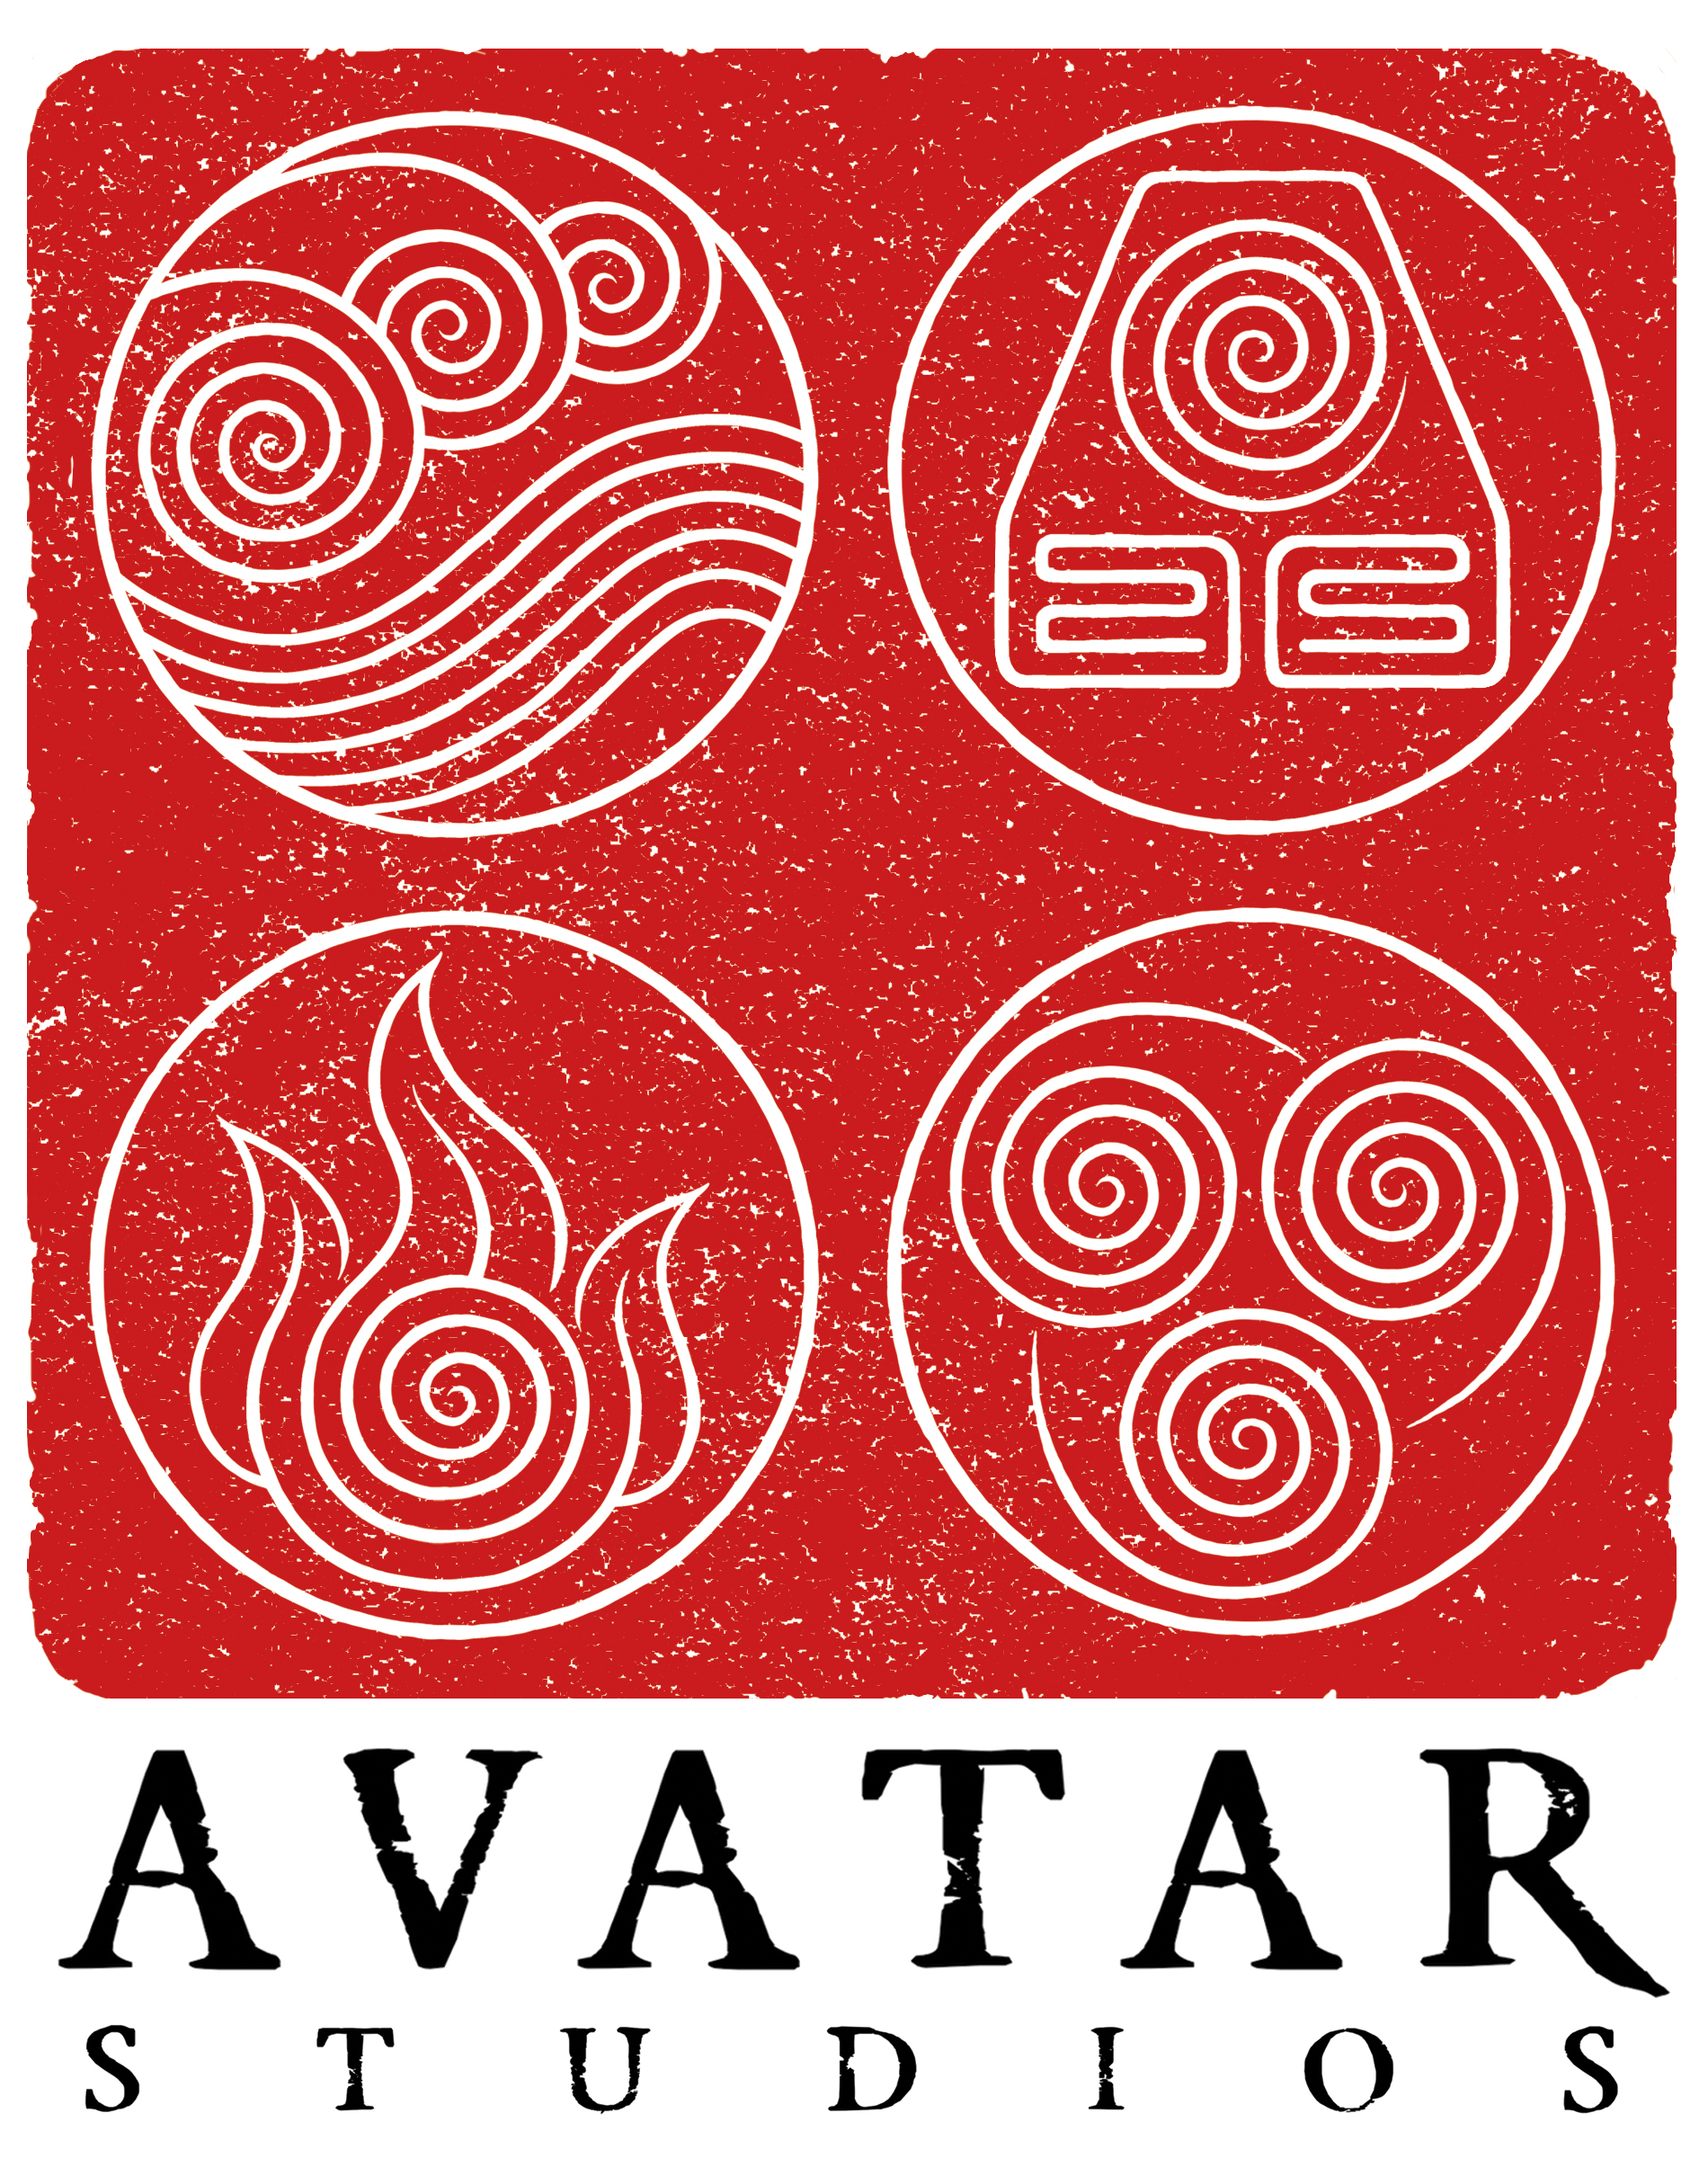 Avatar The Last Airbender Creators Tease Ambitious Avatar Studios Plans  Spanning 20 Years